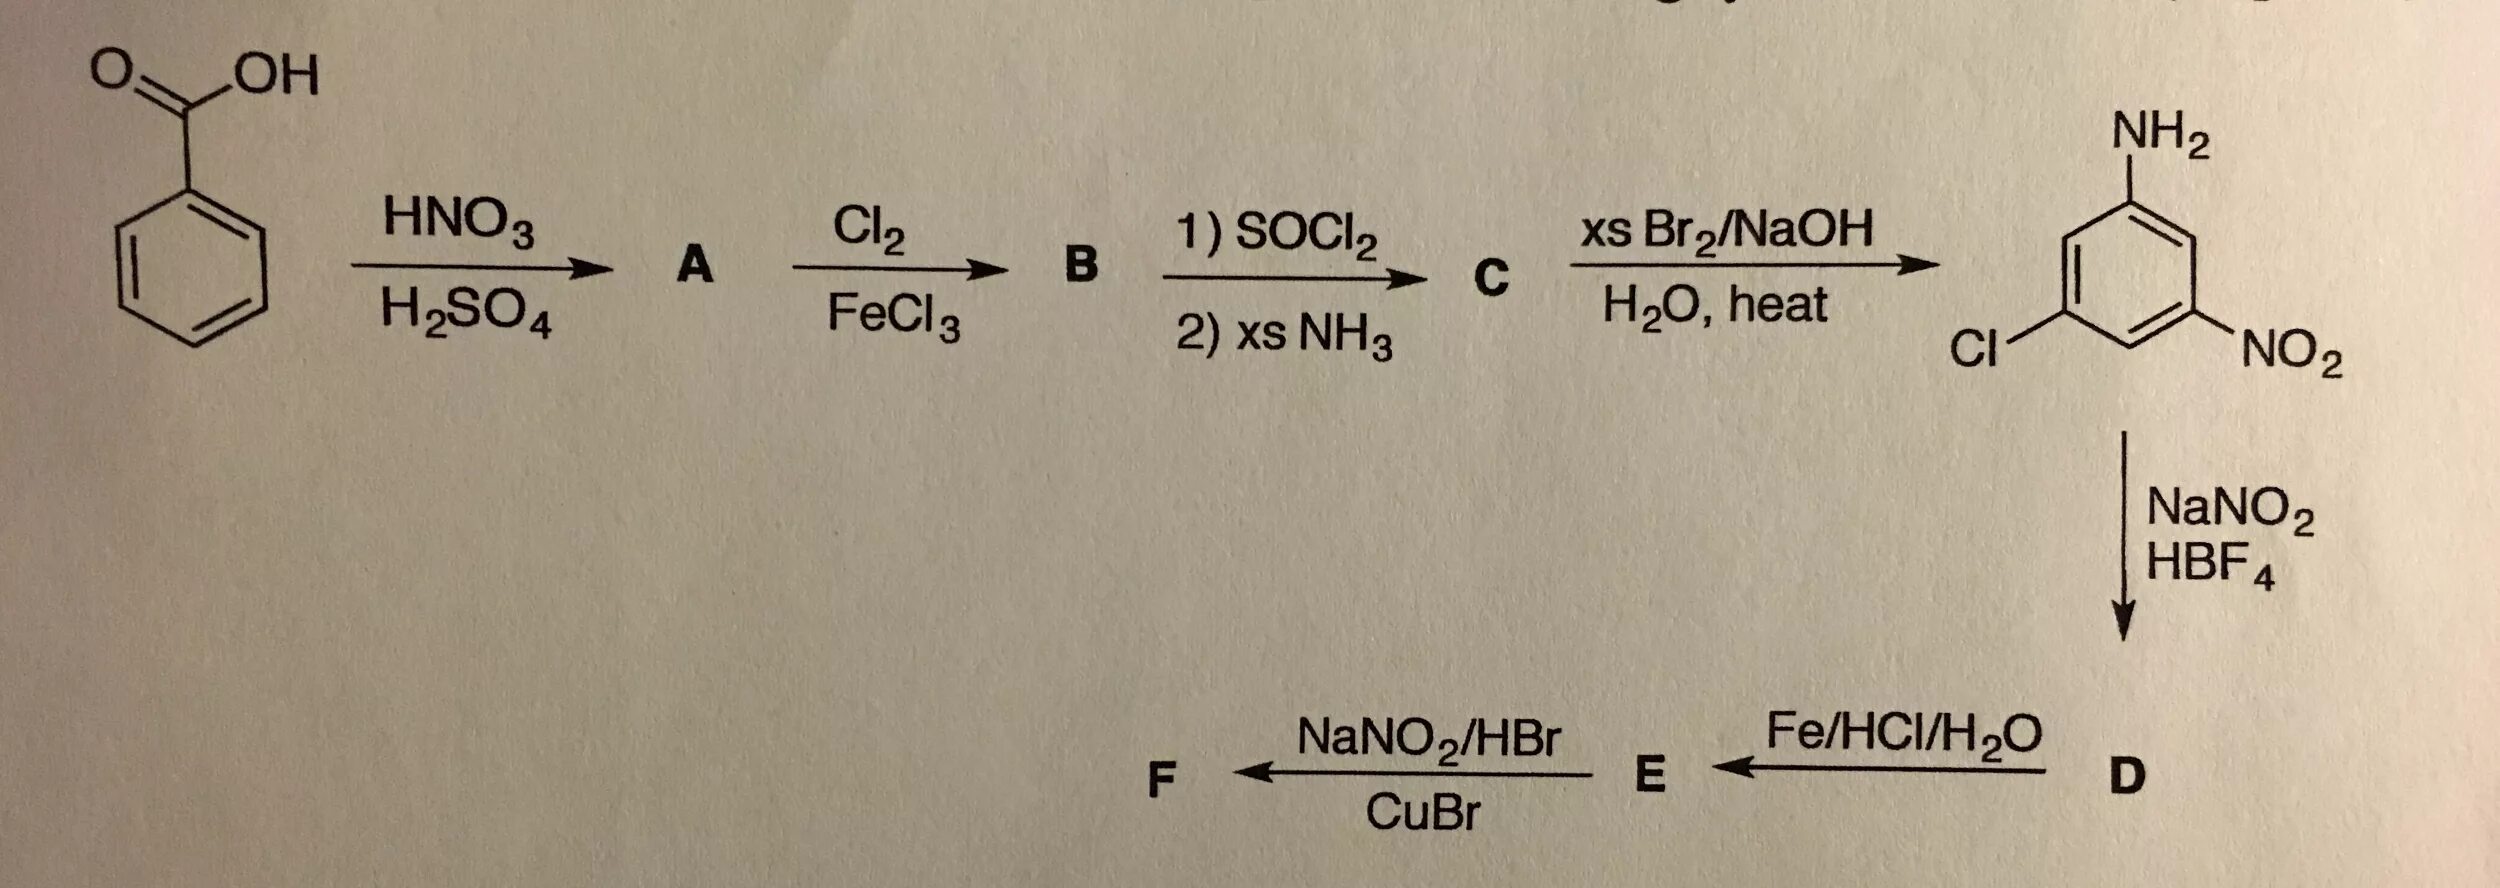 Ch3nh3br + hno2. Бензол hno2. Метилбензол + 2cl2 al2o3. Hno3 h2so4.